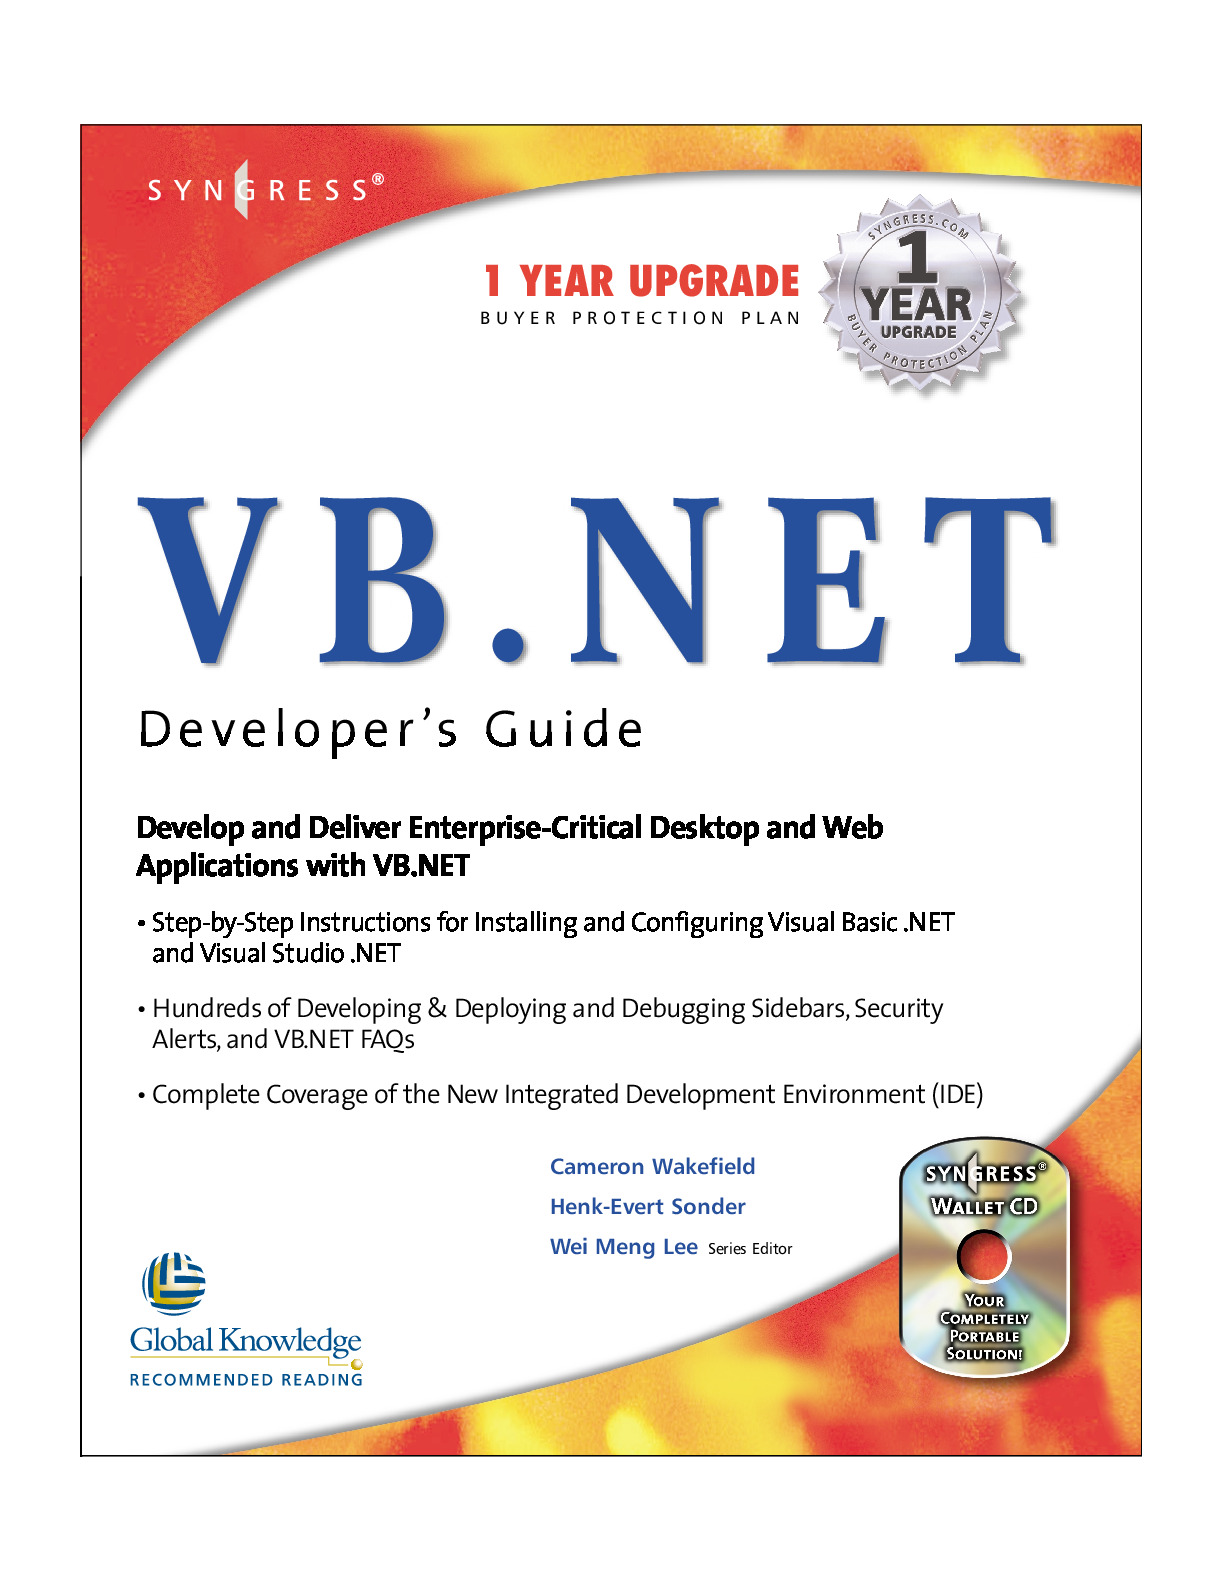 VB.NET Syngress Developers guide 2001